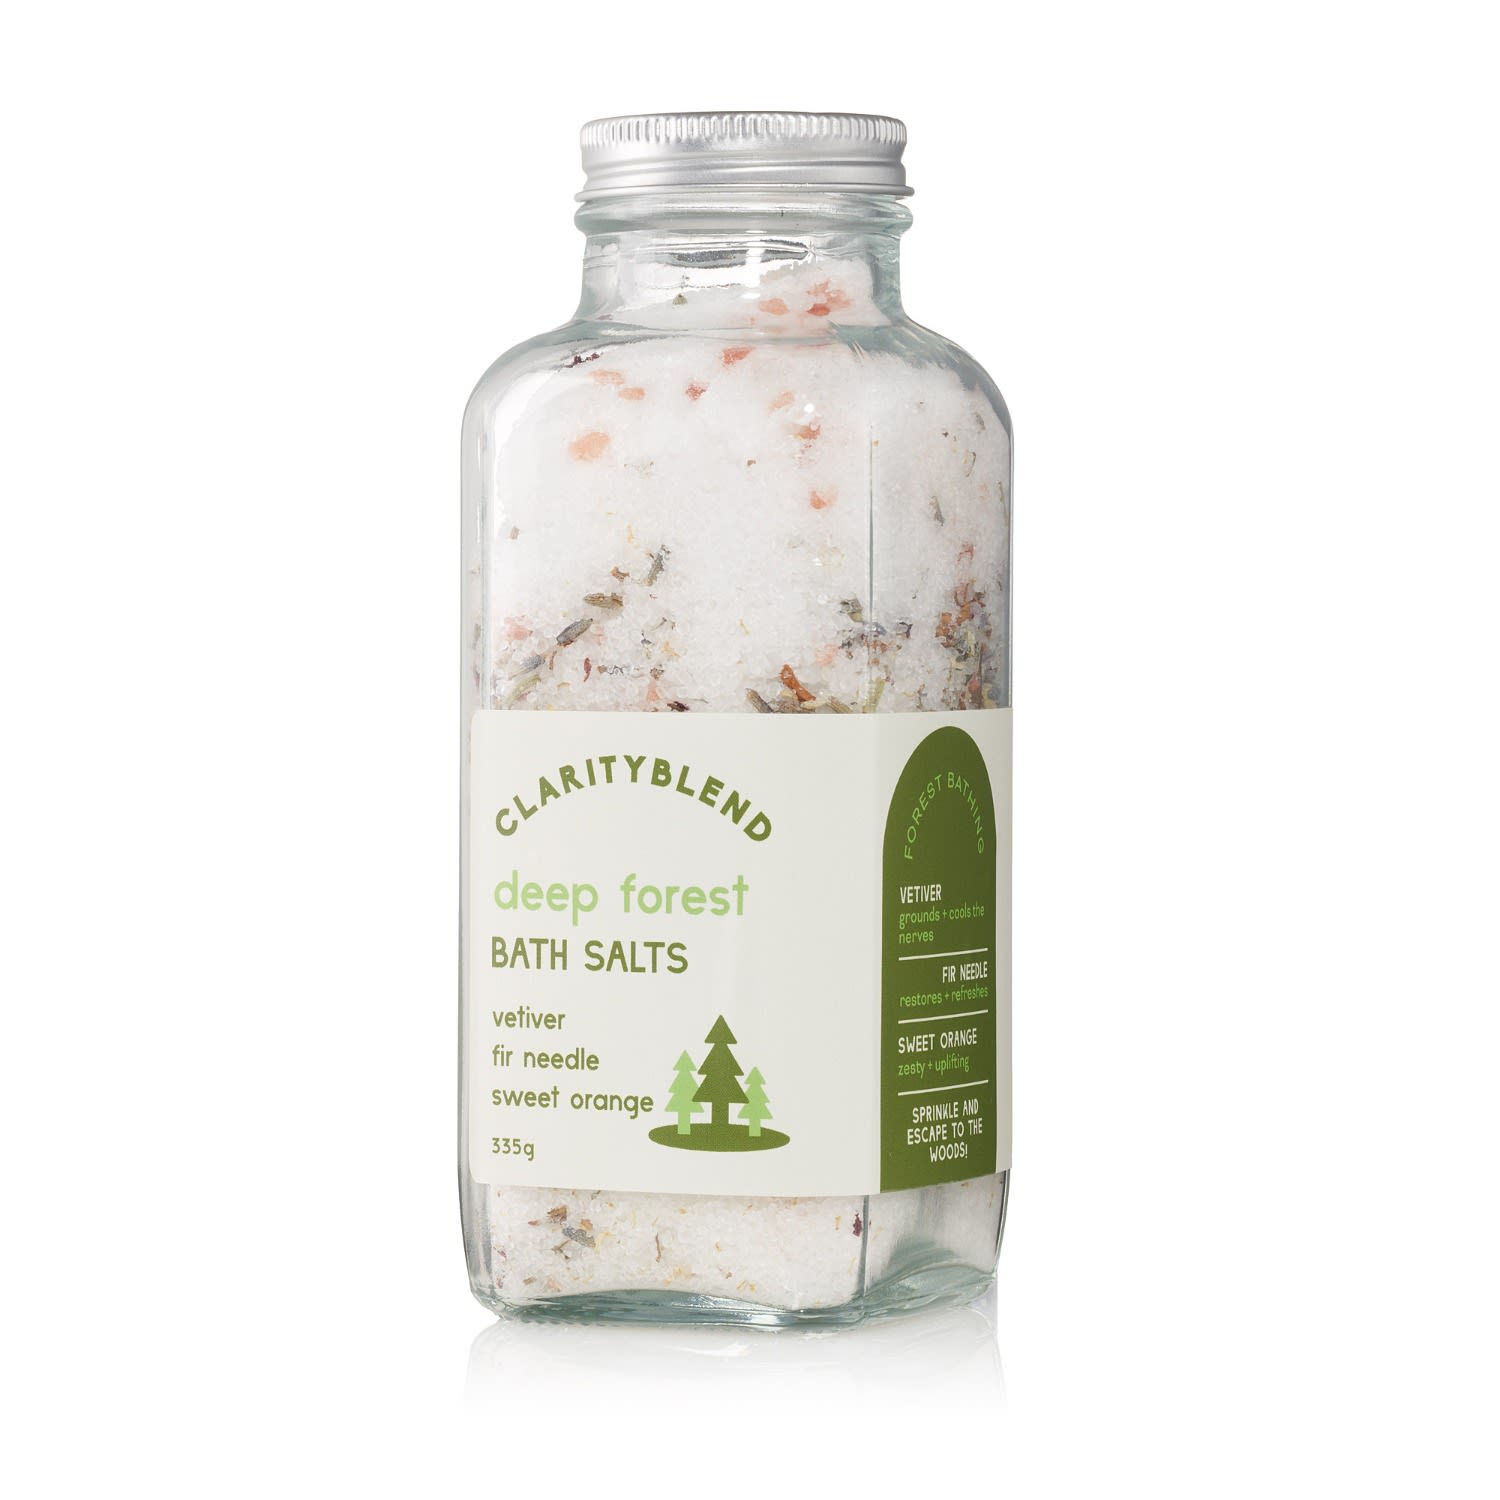 Deep Forest Bath Salts Clarity Blend Aromatherapy